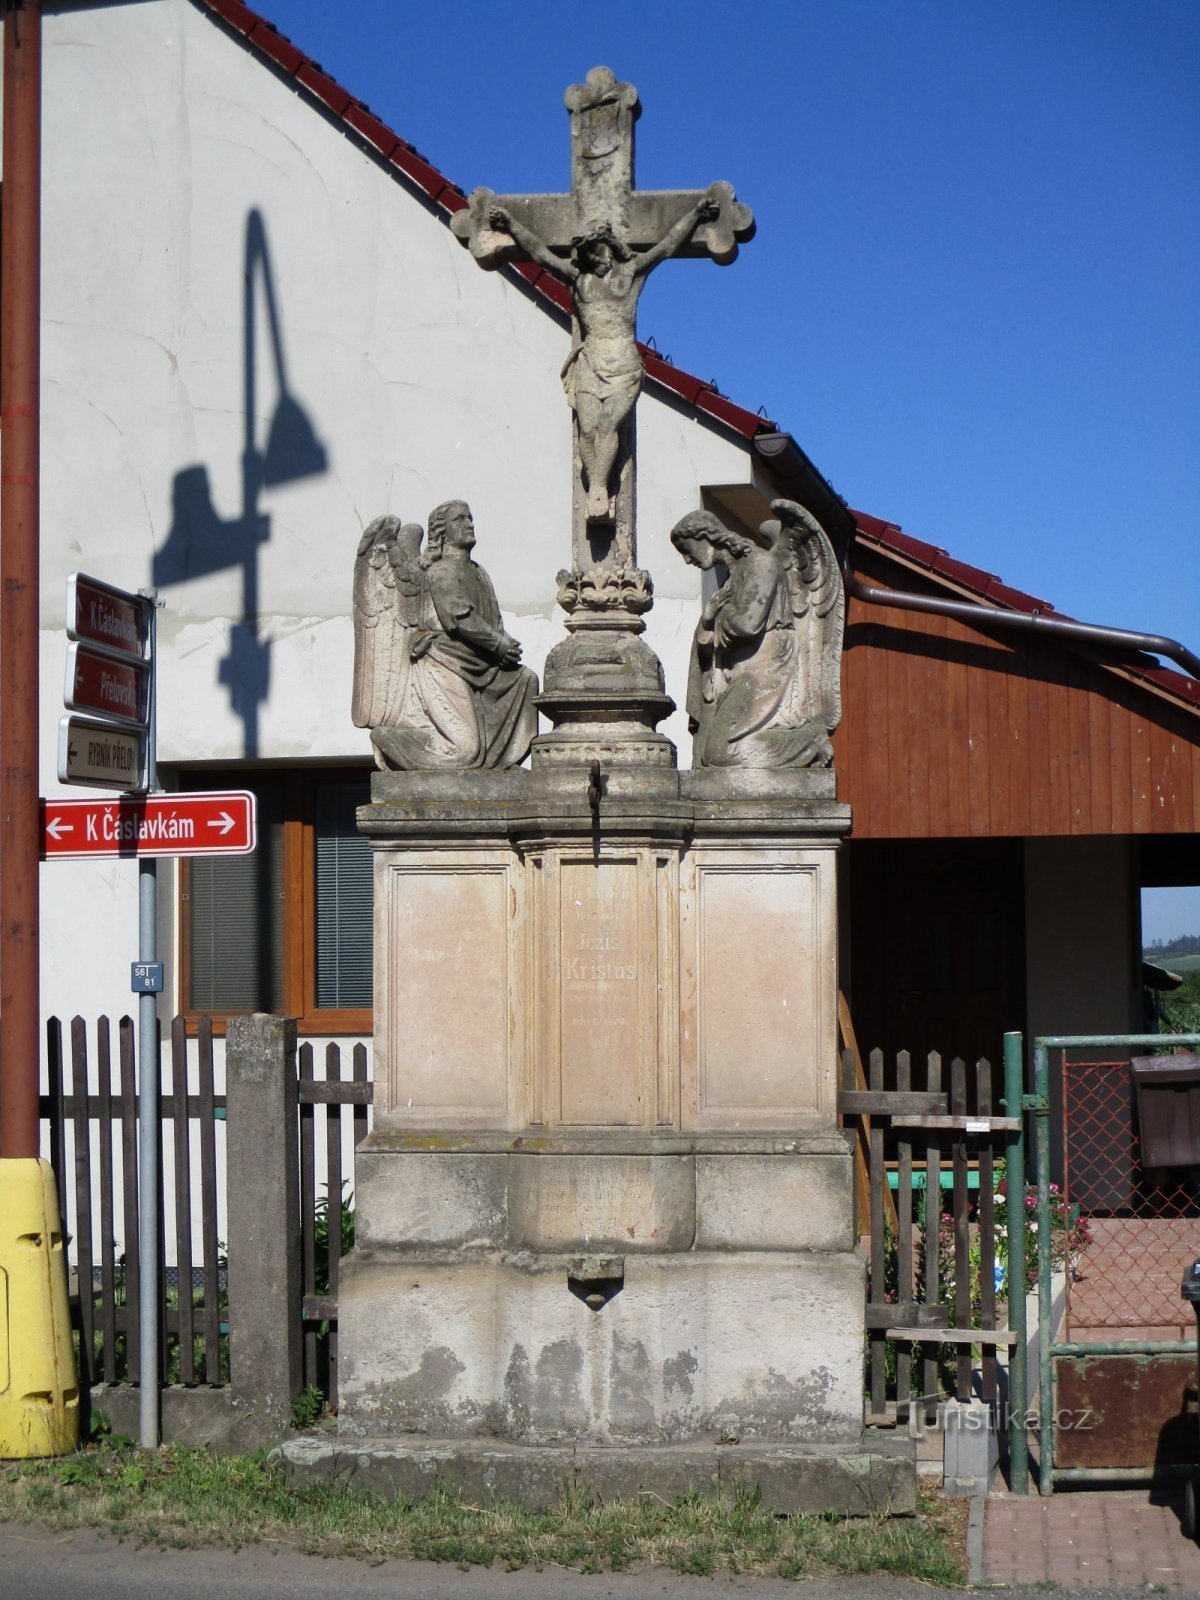 Cross at No. 168 (Černožice)